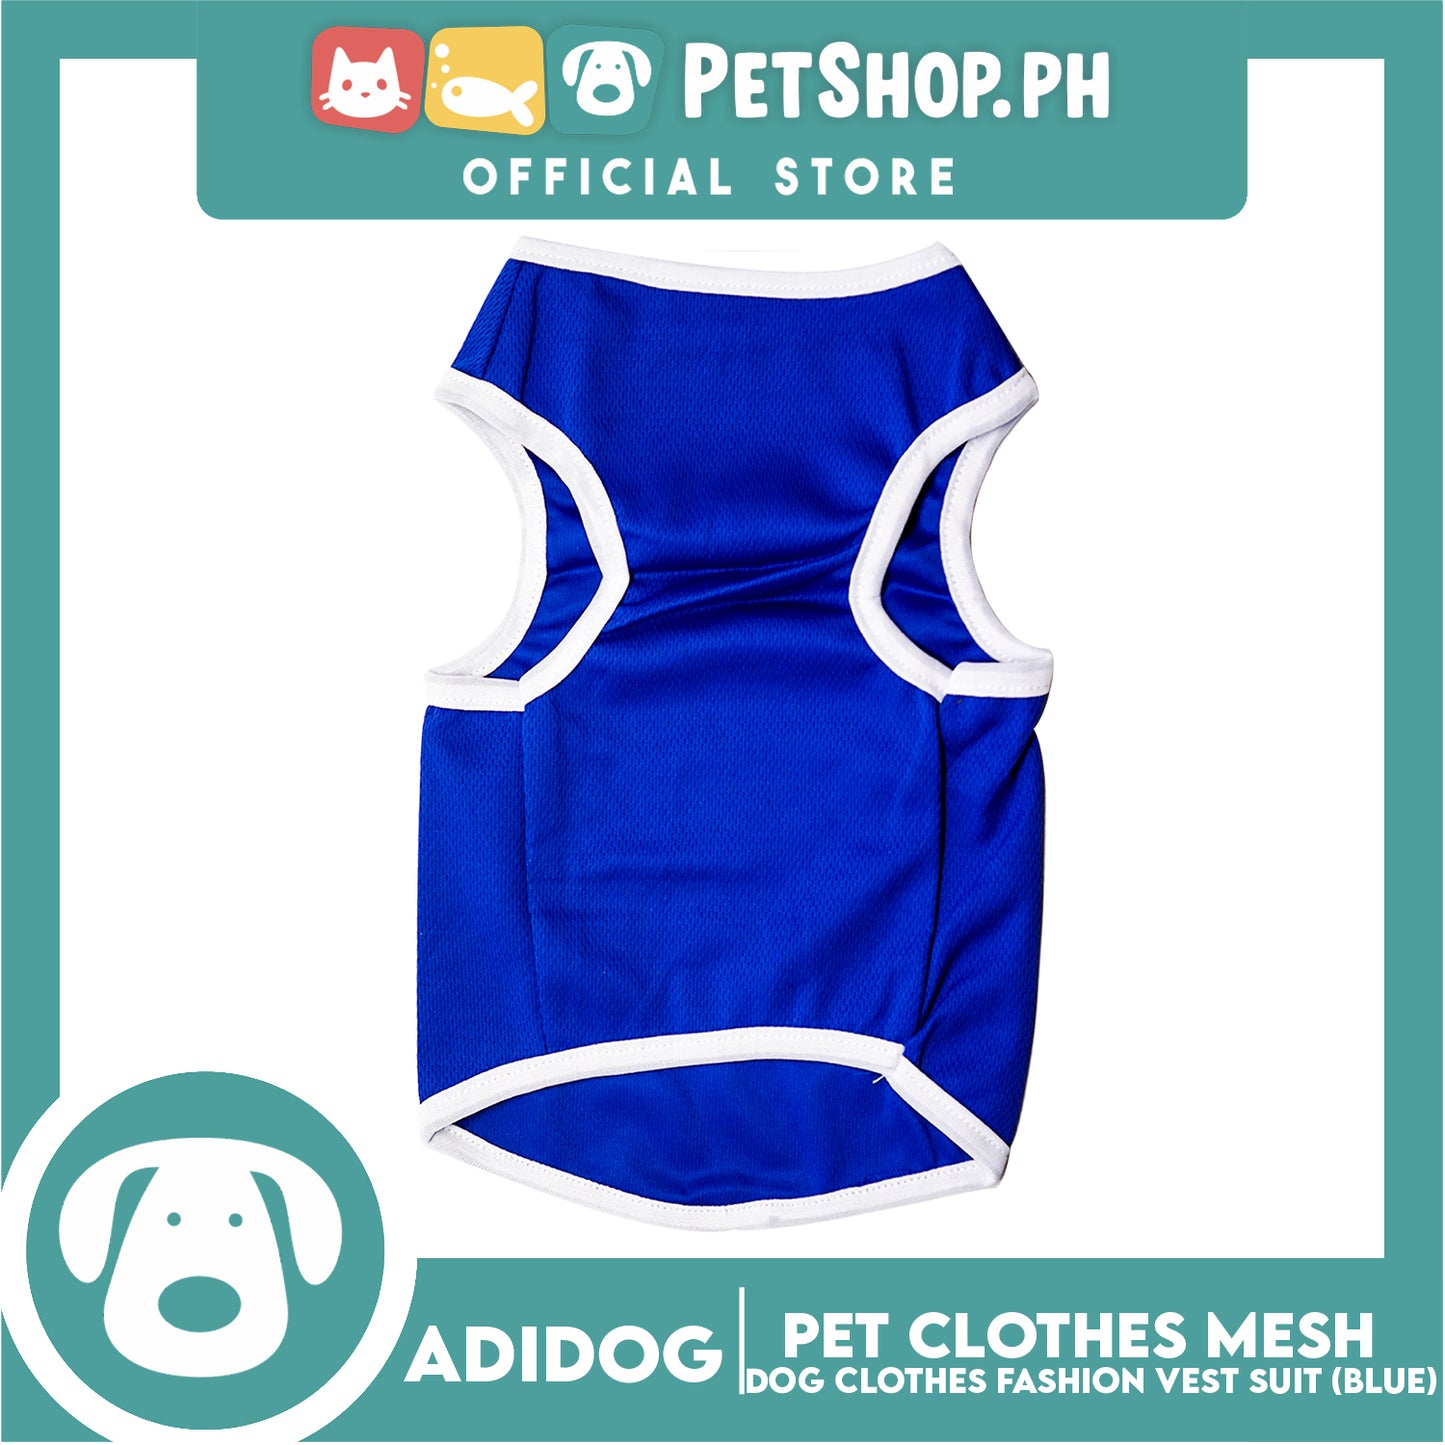 Adidog Pet Clothes Mesh Vet, Summer Dog Clothes, Breathable Mesh Vet, Dog Shirt, Pet Jersey, Fashion Vest Suit for Dogs (Blue) (Medium)